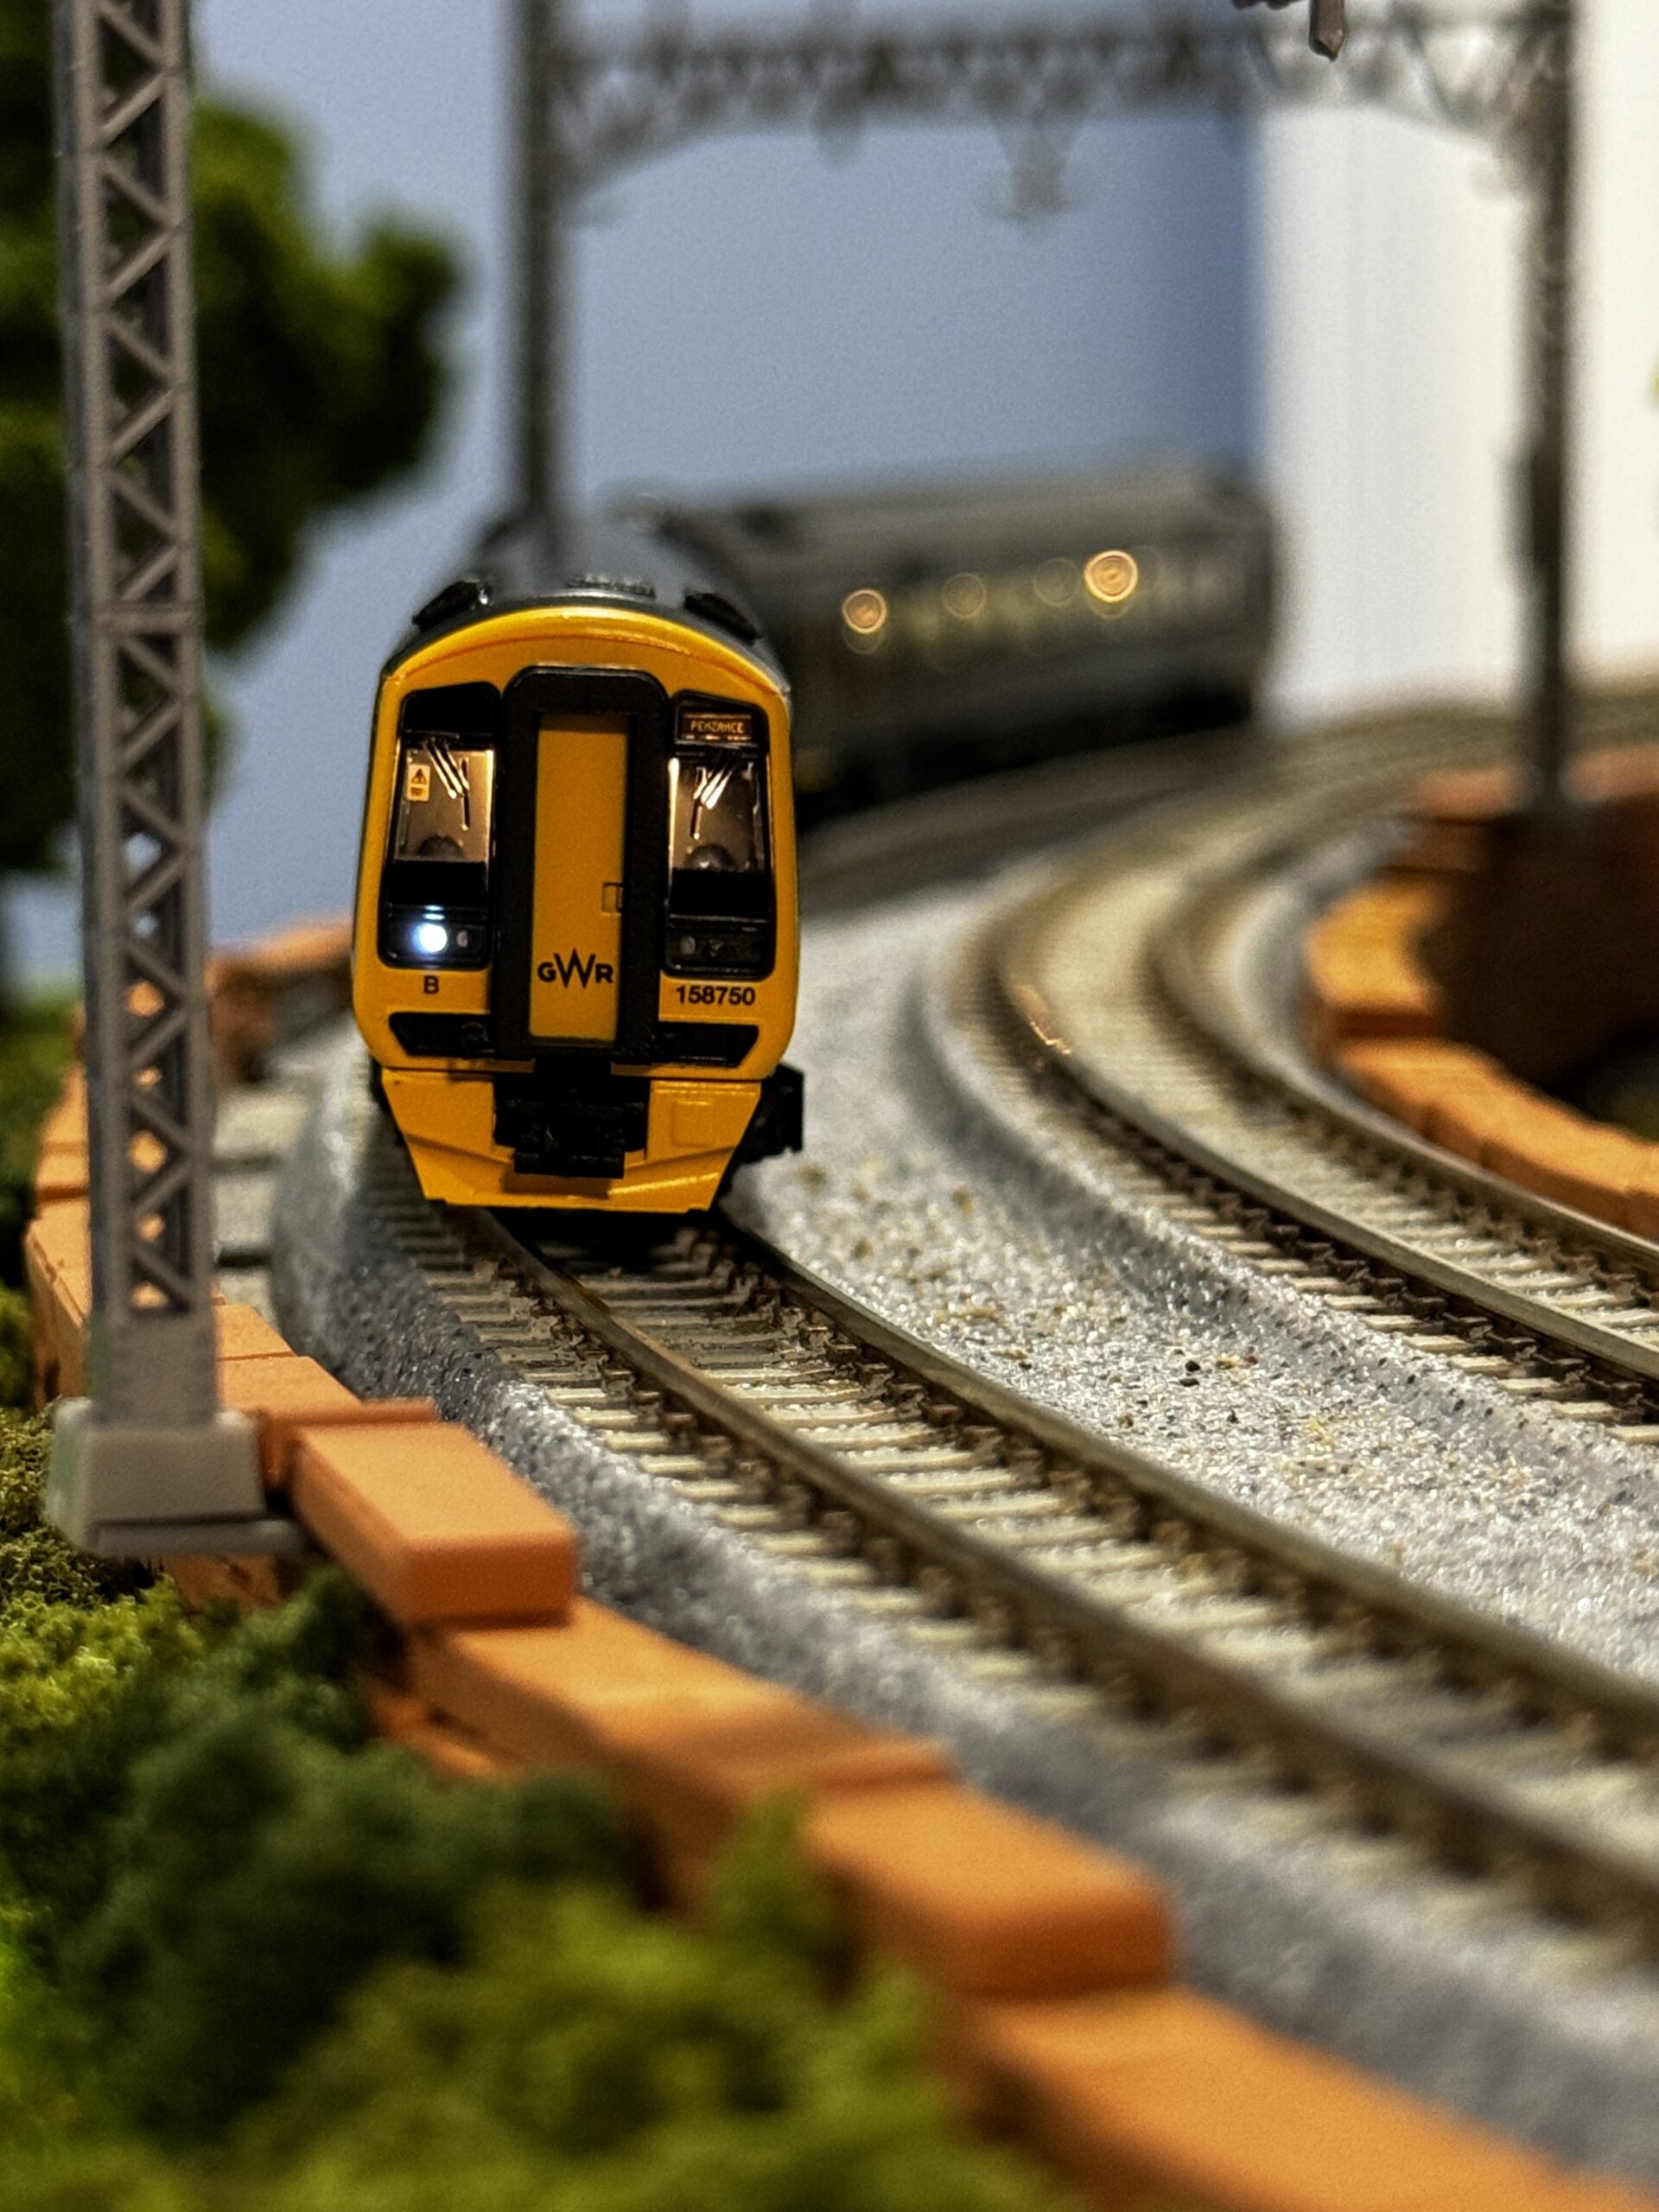 New on the Layout – British Rail Class 158 DMU